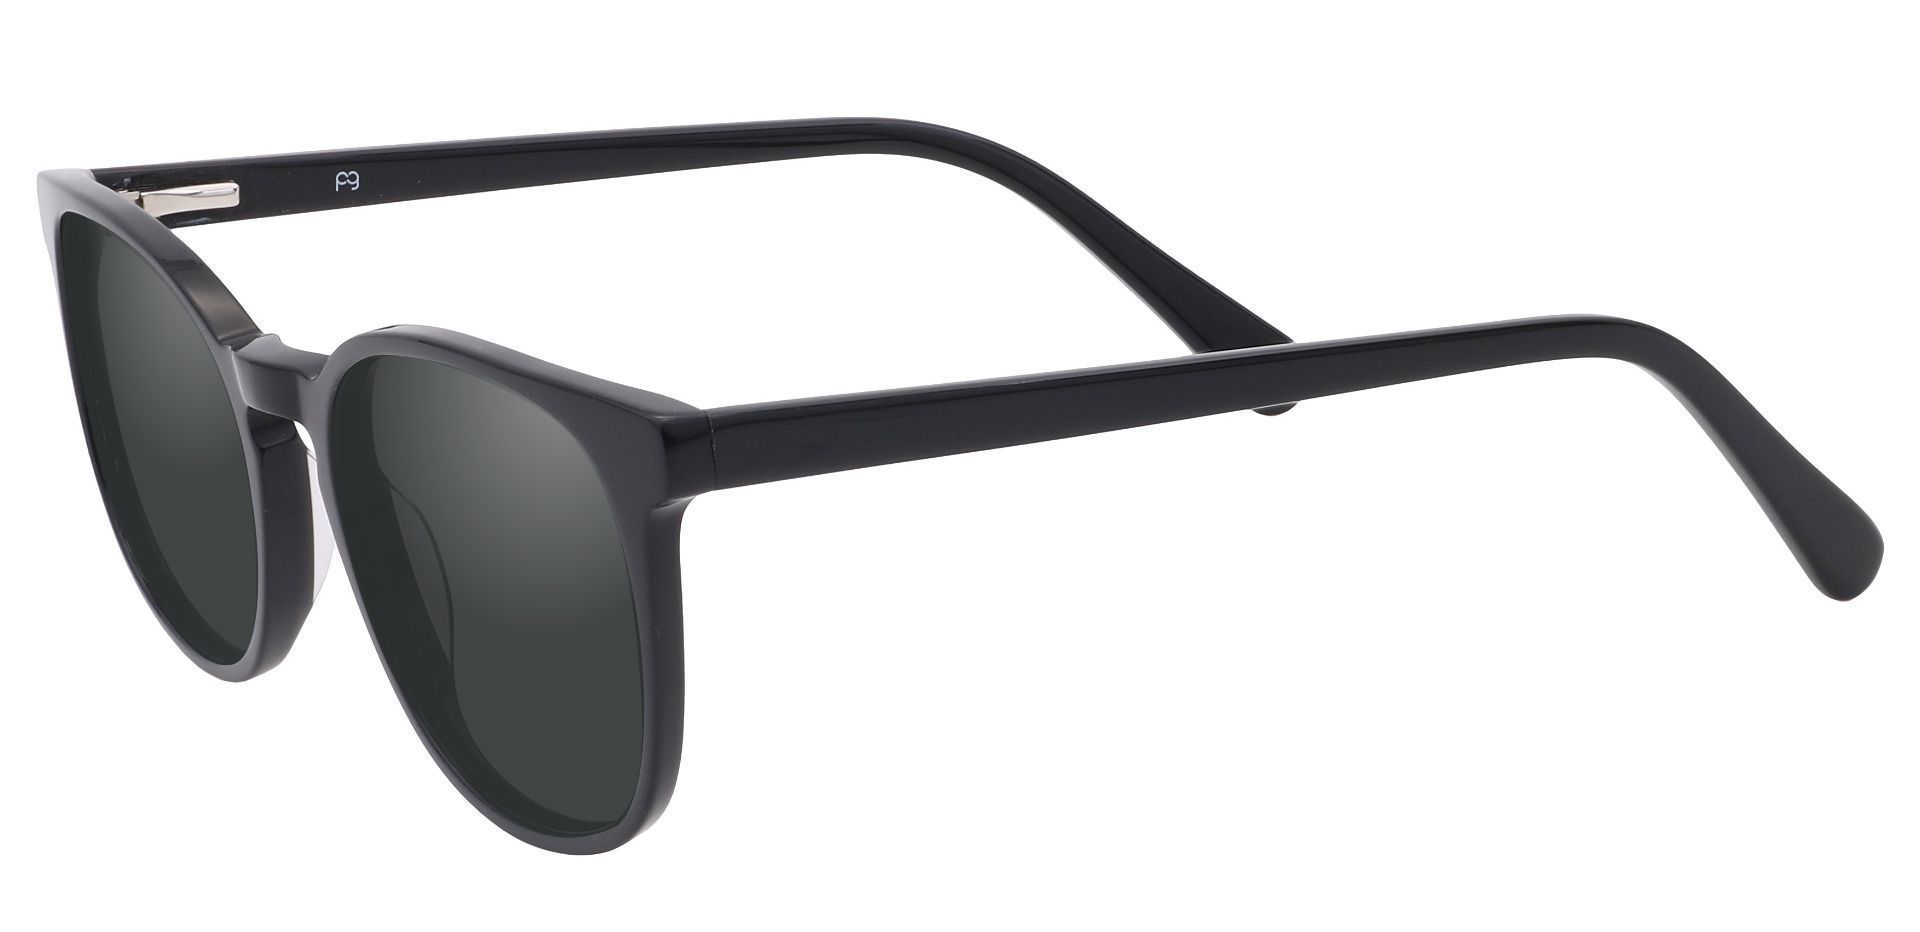 Nebula Round Reading Sunglasses - Black Frame With Gray Lenses